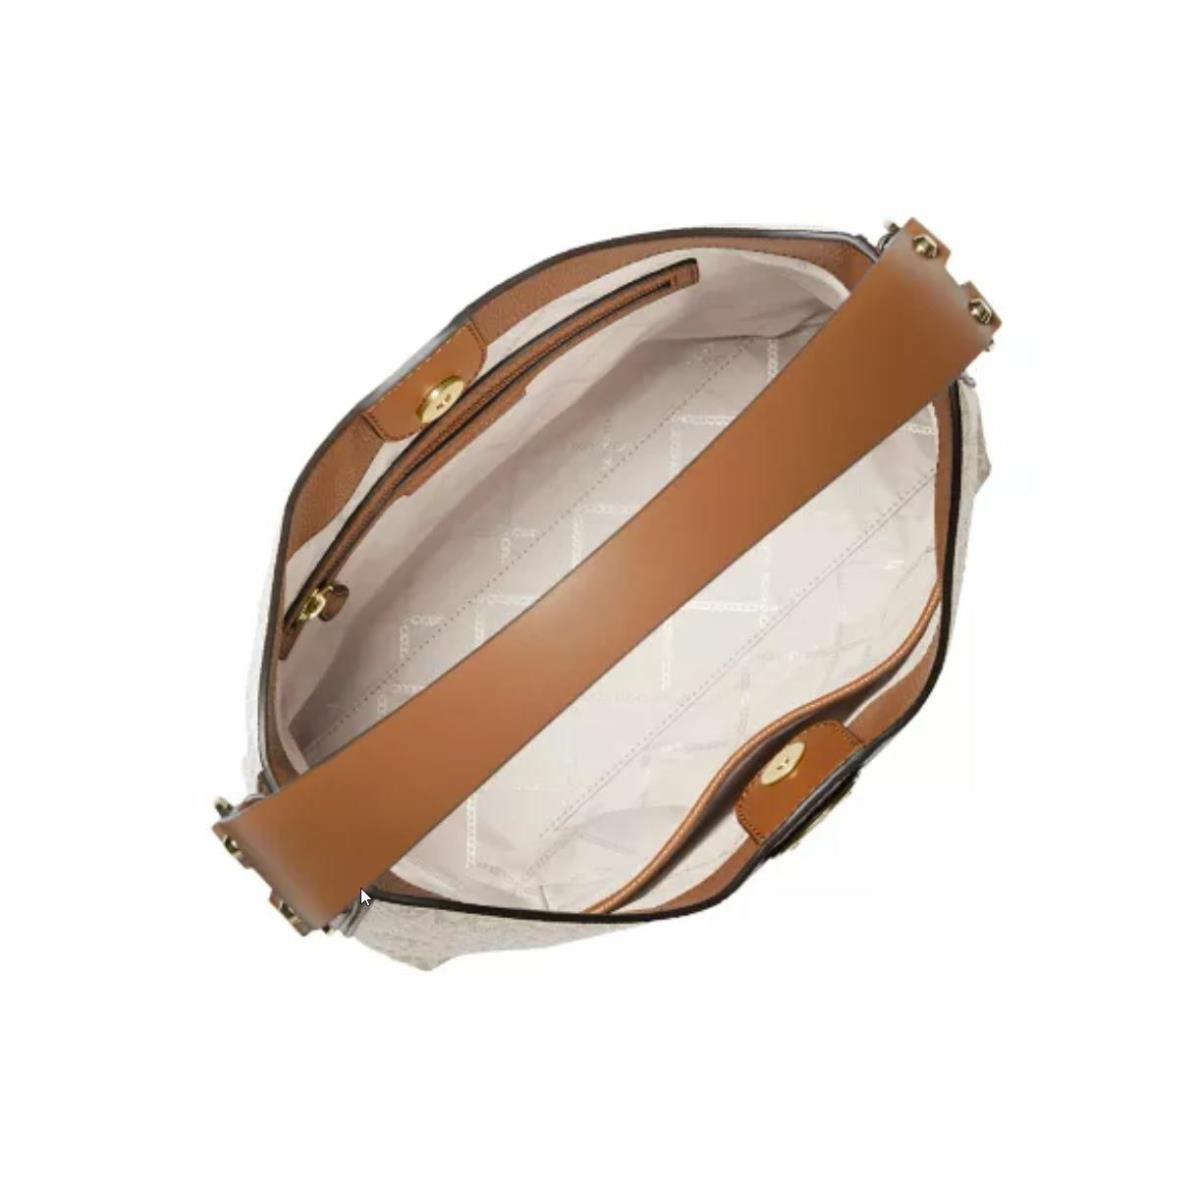 Michael Kors Bowery Large Hobo Shoulder Bag Vanilla/acorn